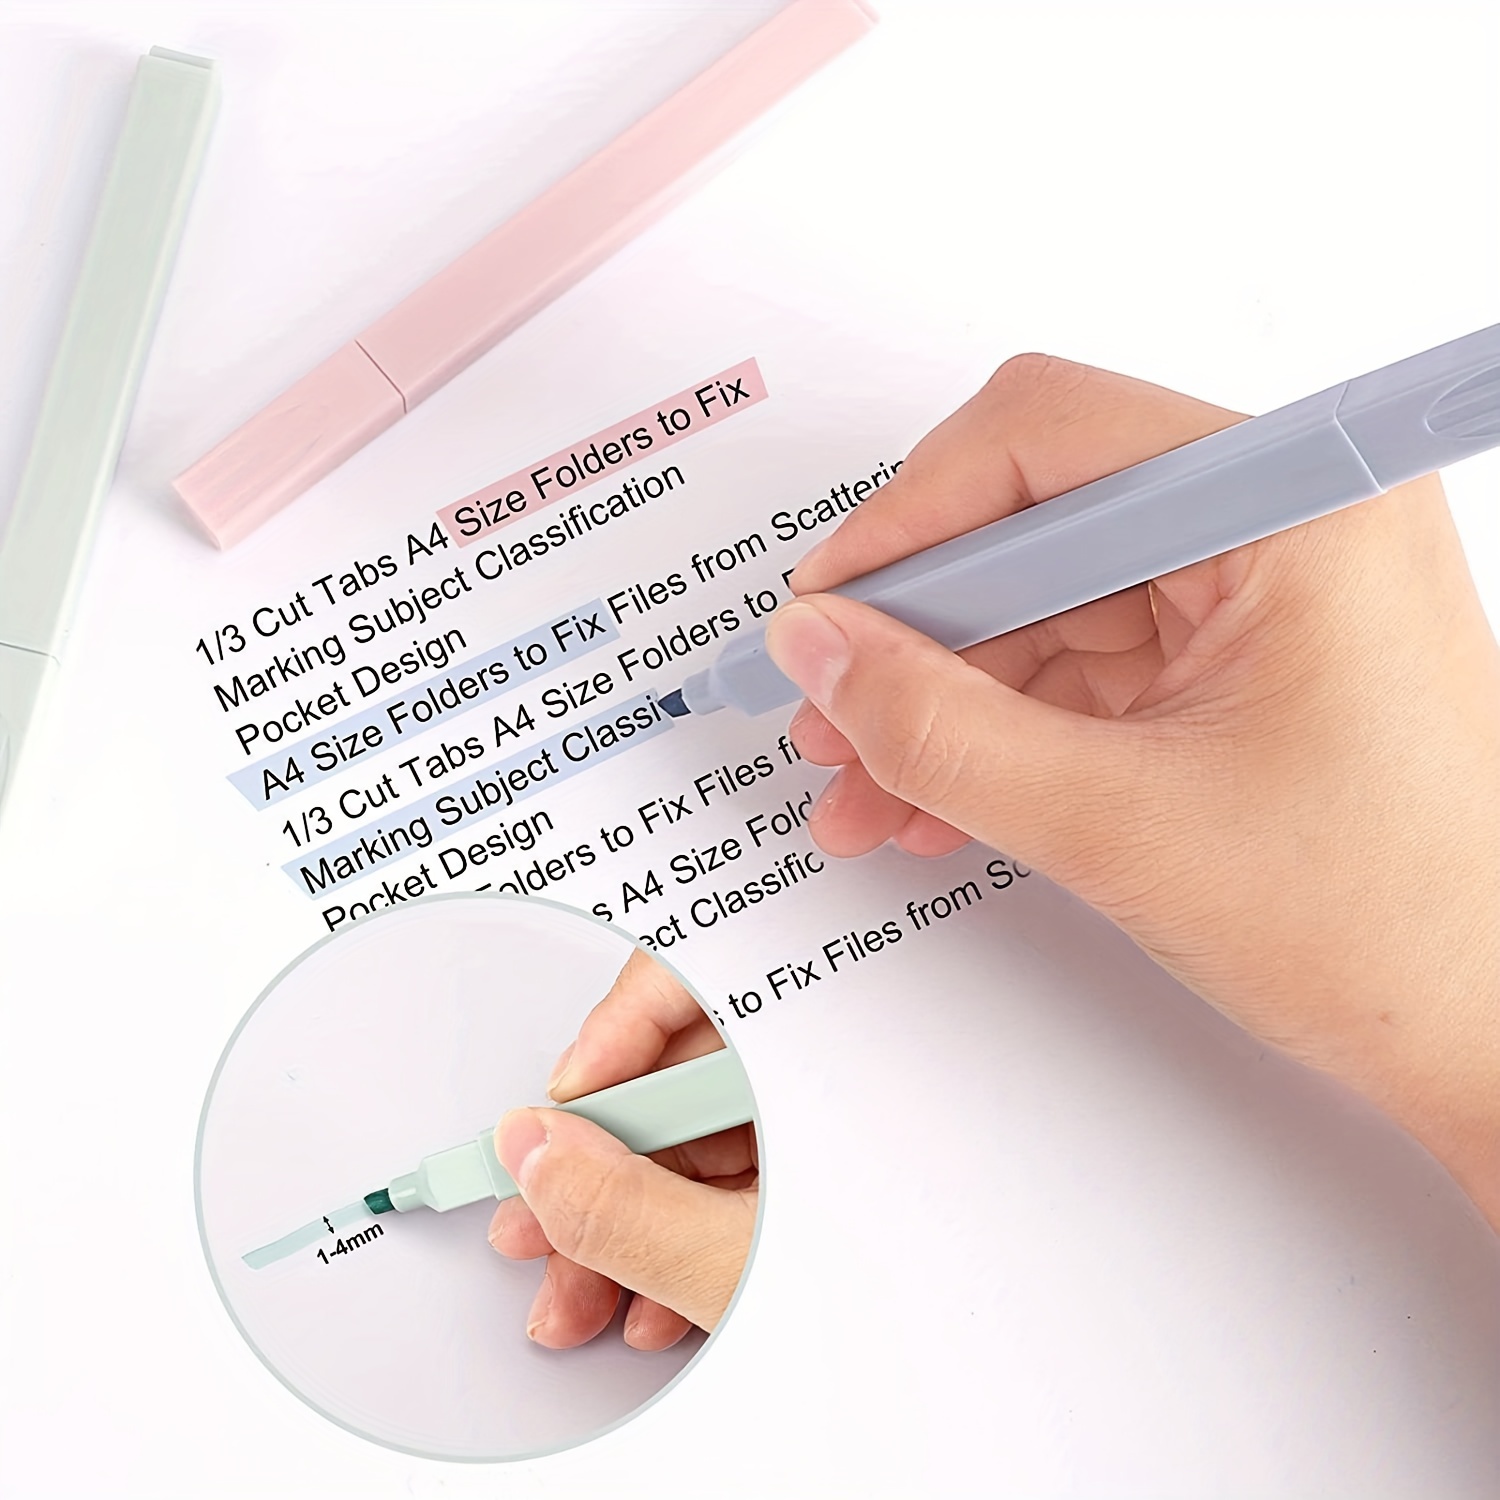  JEFFNIUB Dual Brush Markers Pens 24 Colors, No Bleed